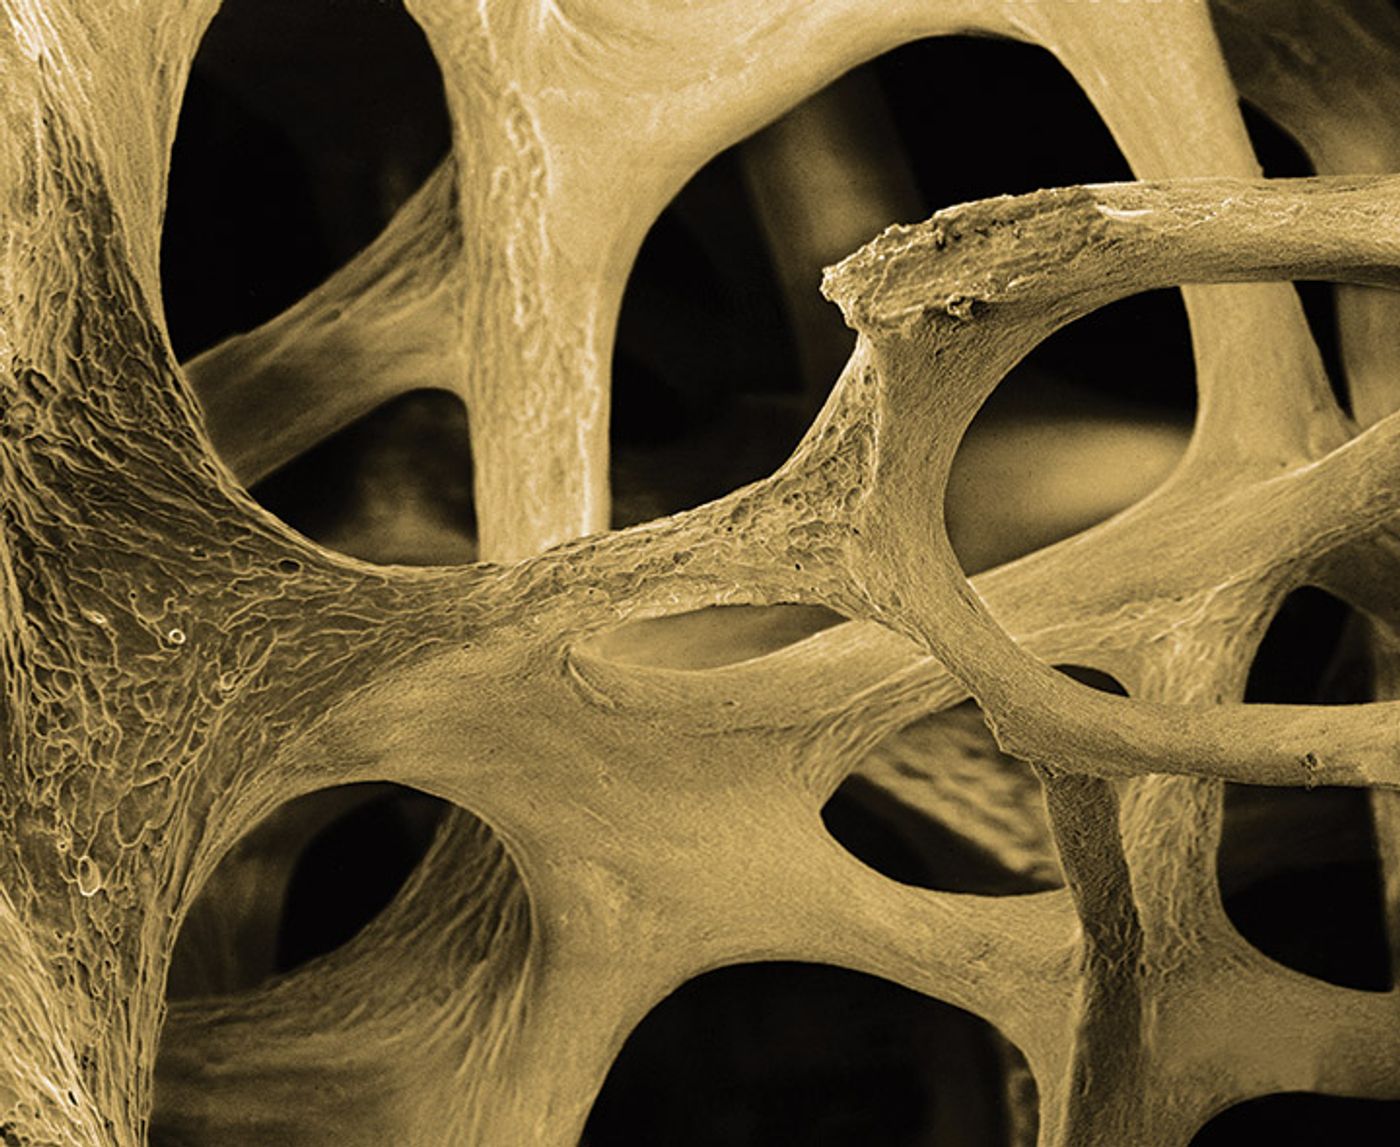 Nanoscale vibrations kickstart stem cells into bone cells | Image: ostinol.com